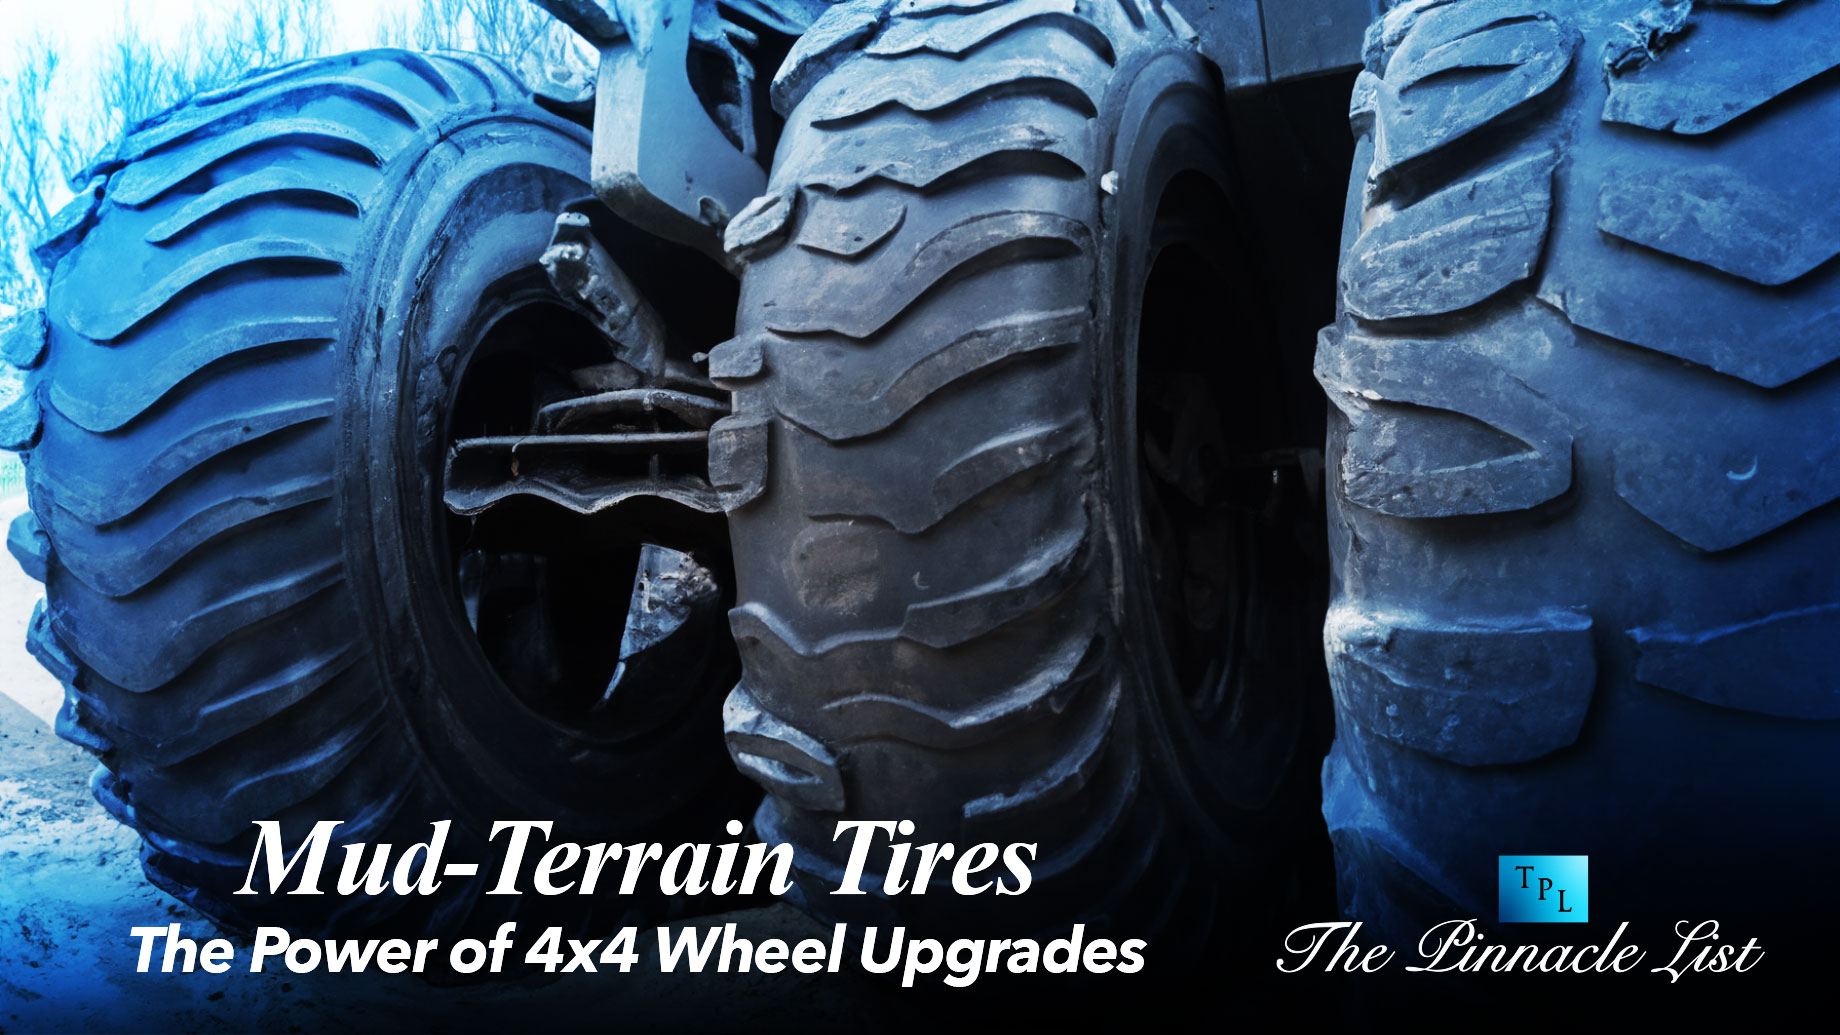 Mud-Terrain Tires: The Power of 4x4 Wheel Upgrades